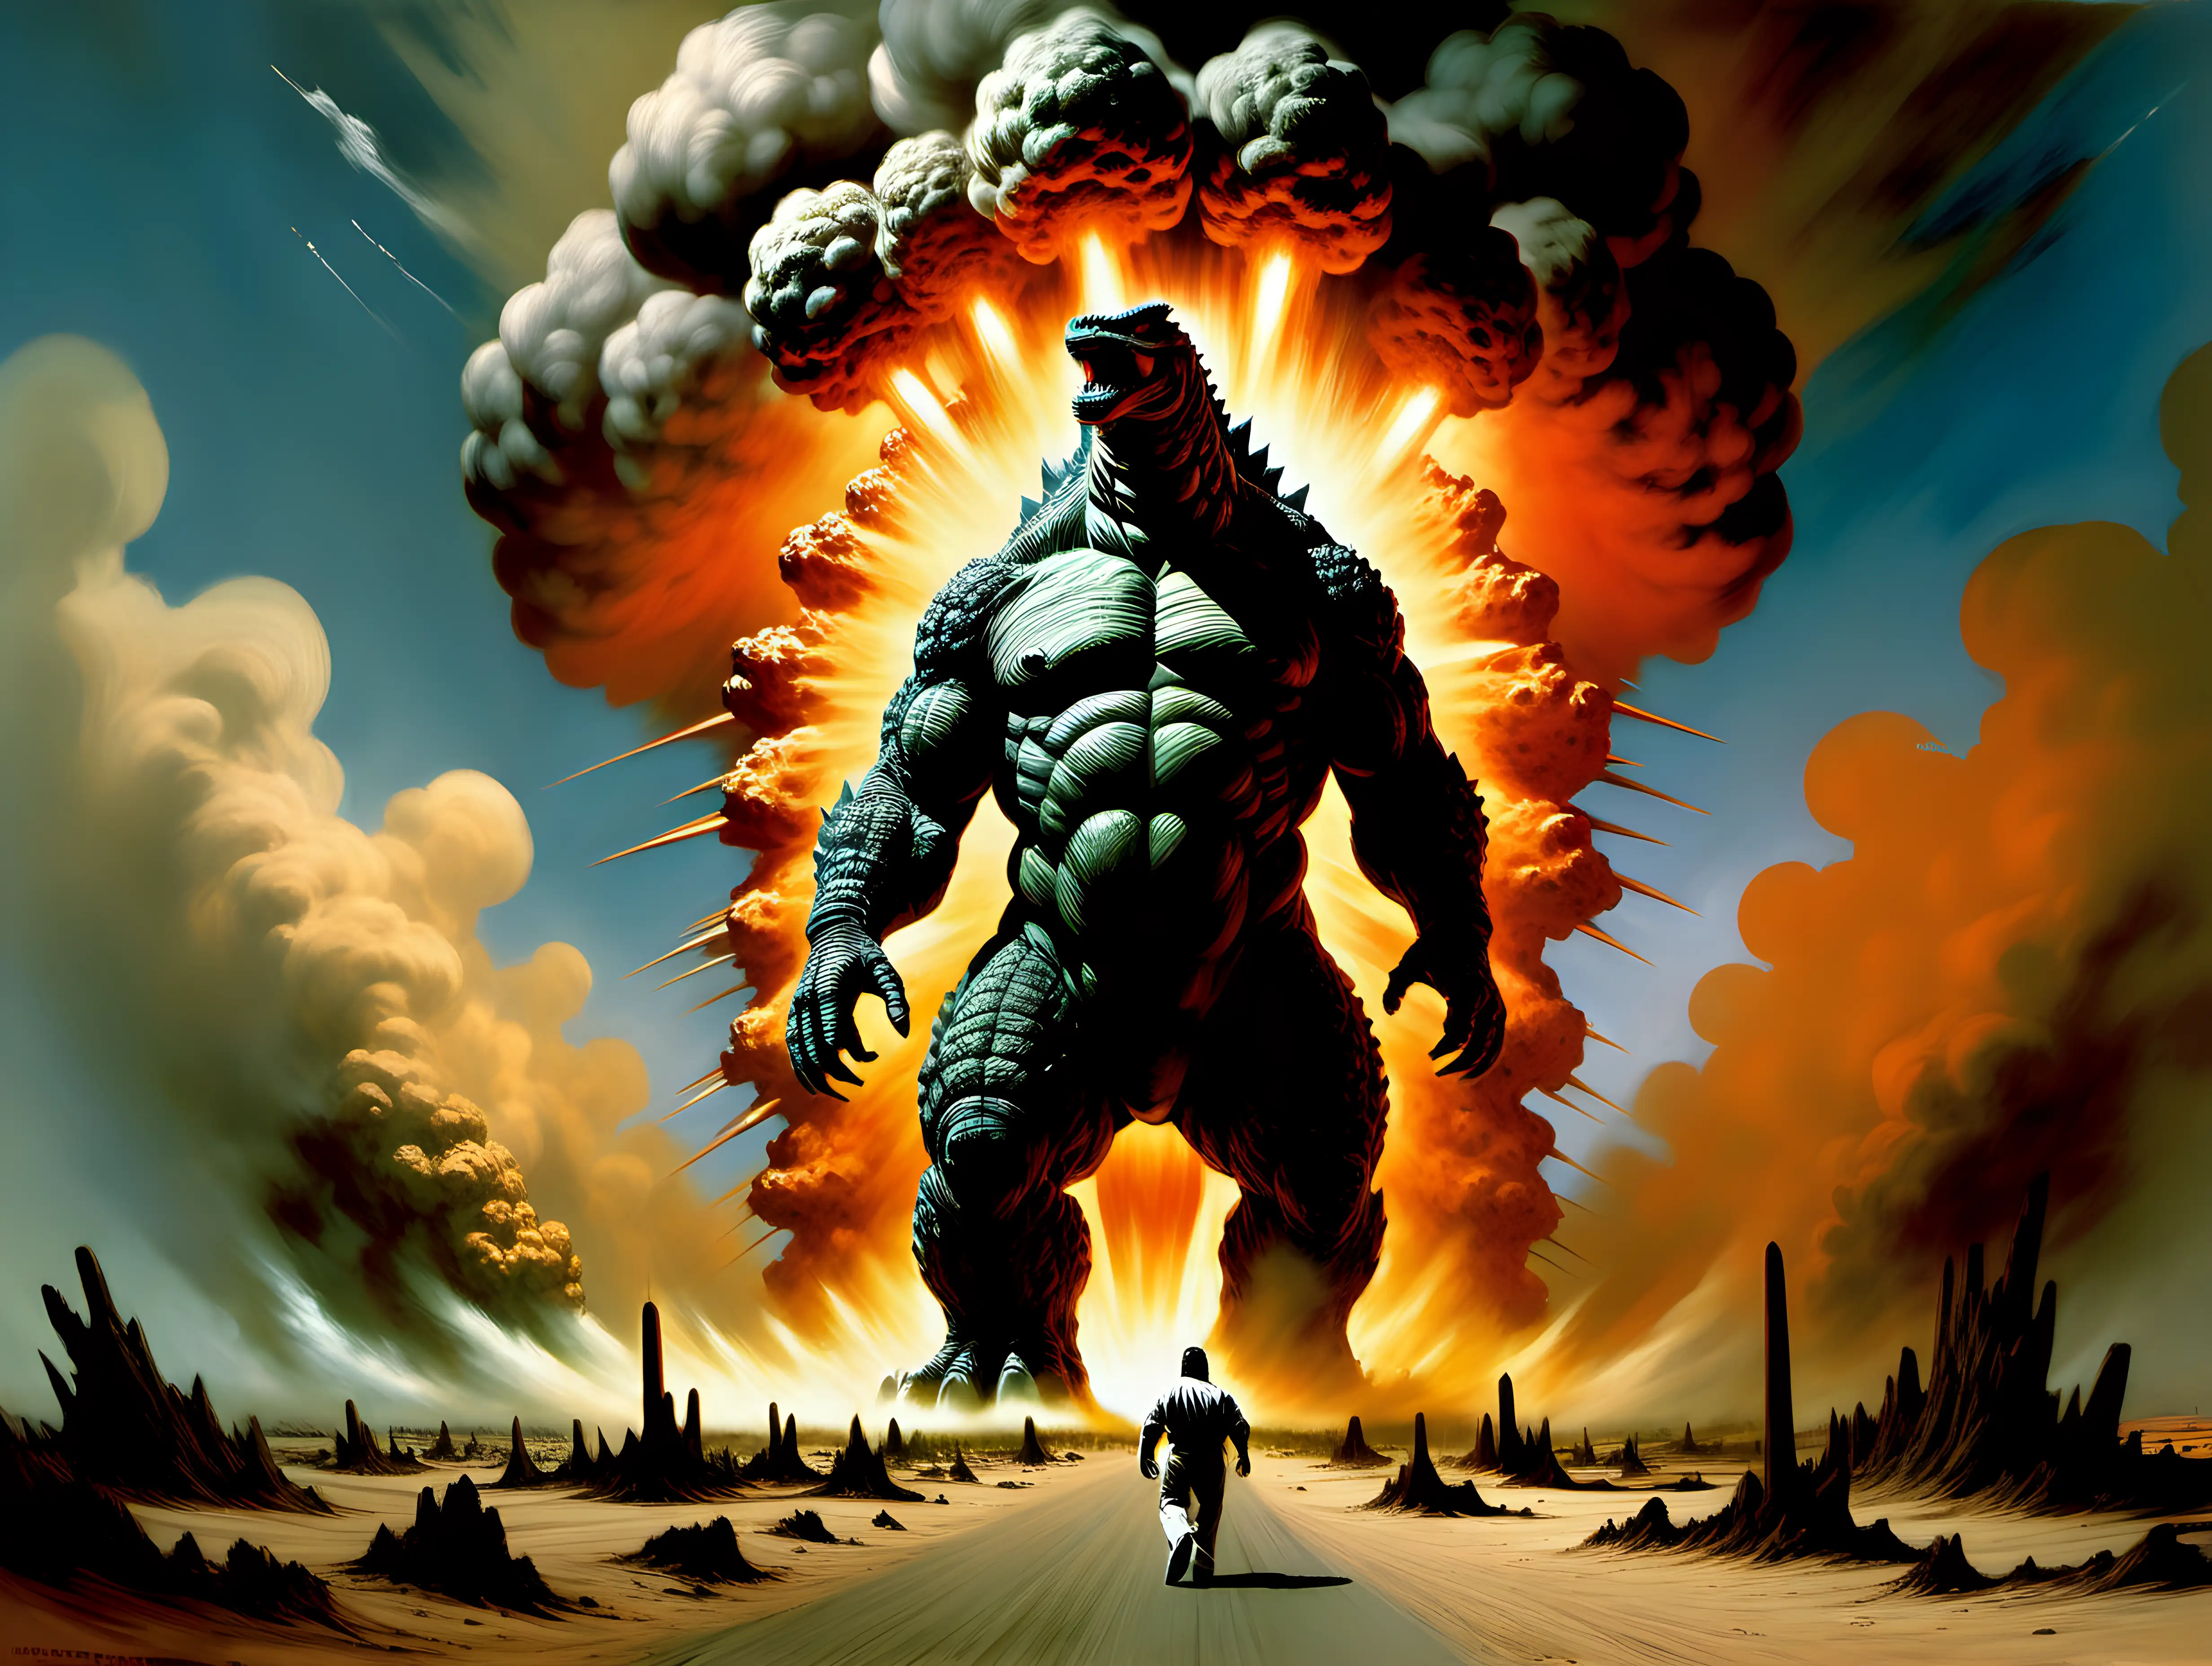 Godzilla walking through a nuclear explosion in the desert Frank Frazetta style